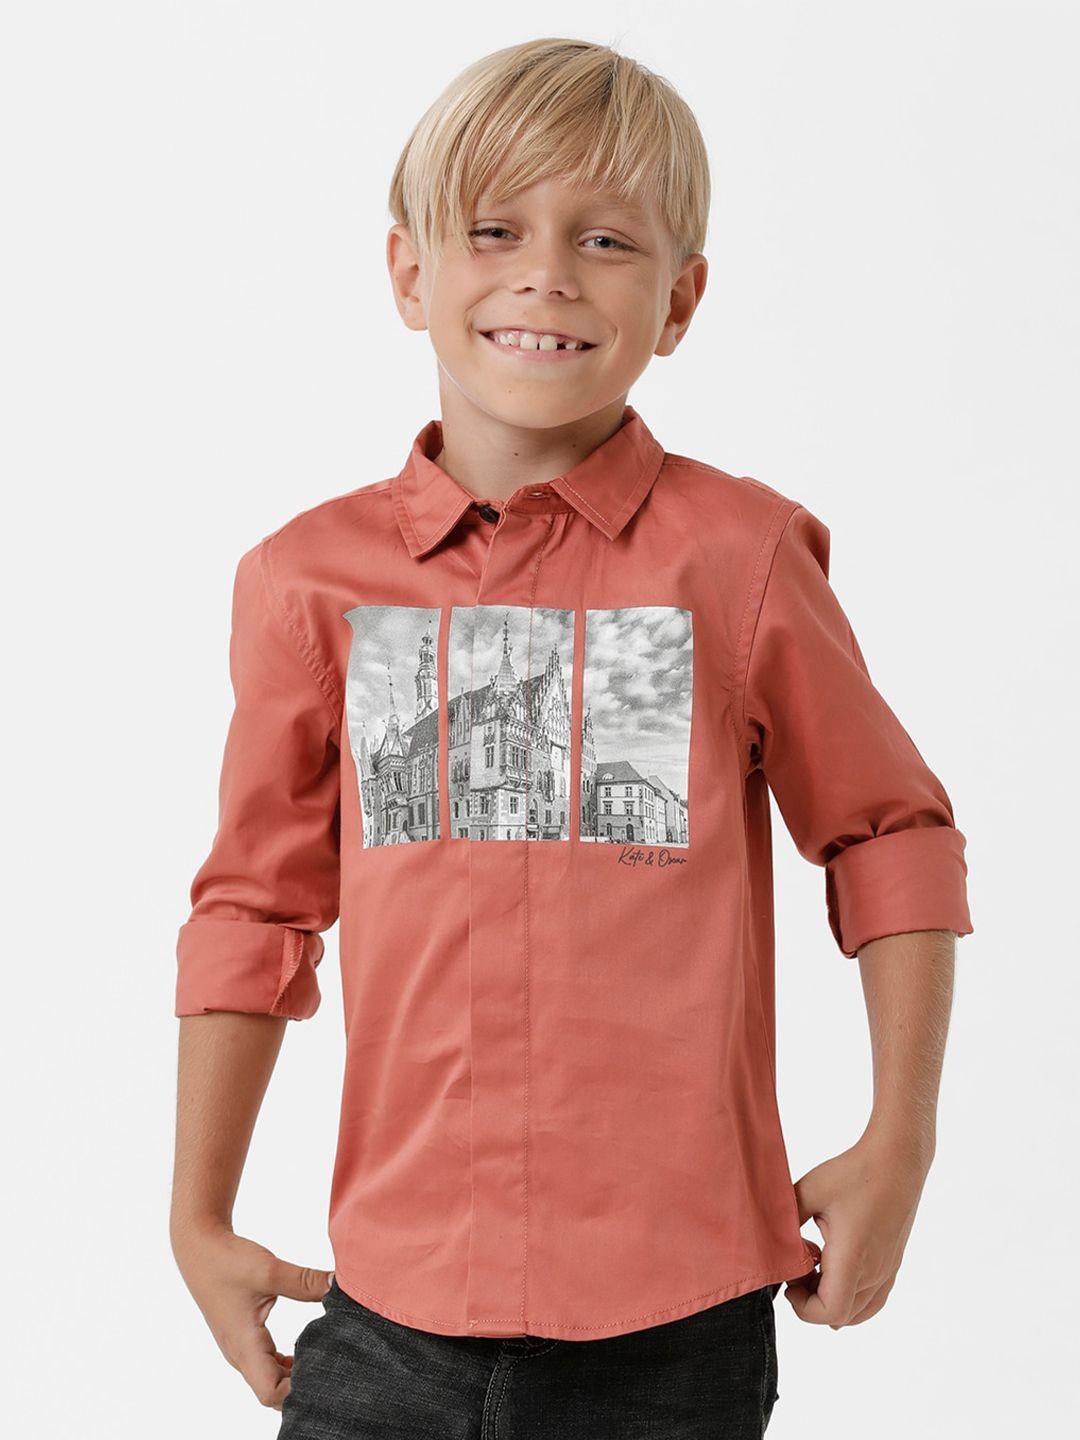 kate & oscar boys smart graphic printed cotton casual shirt